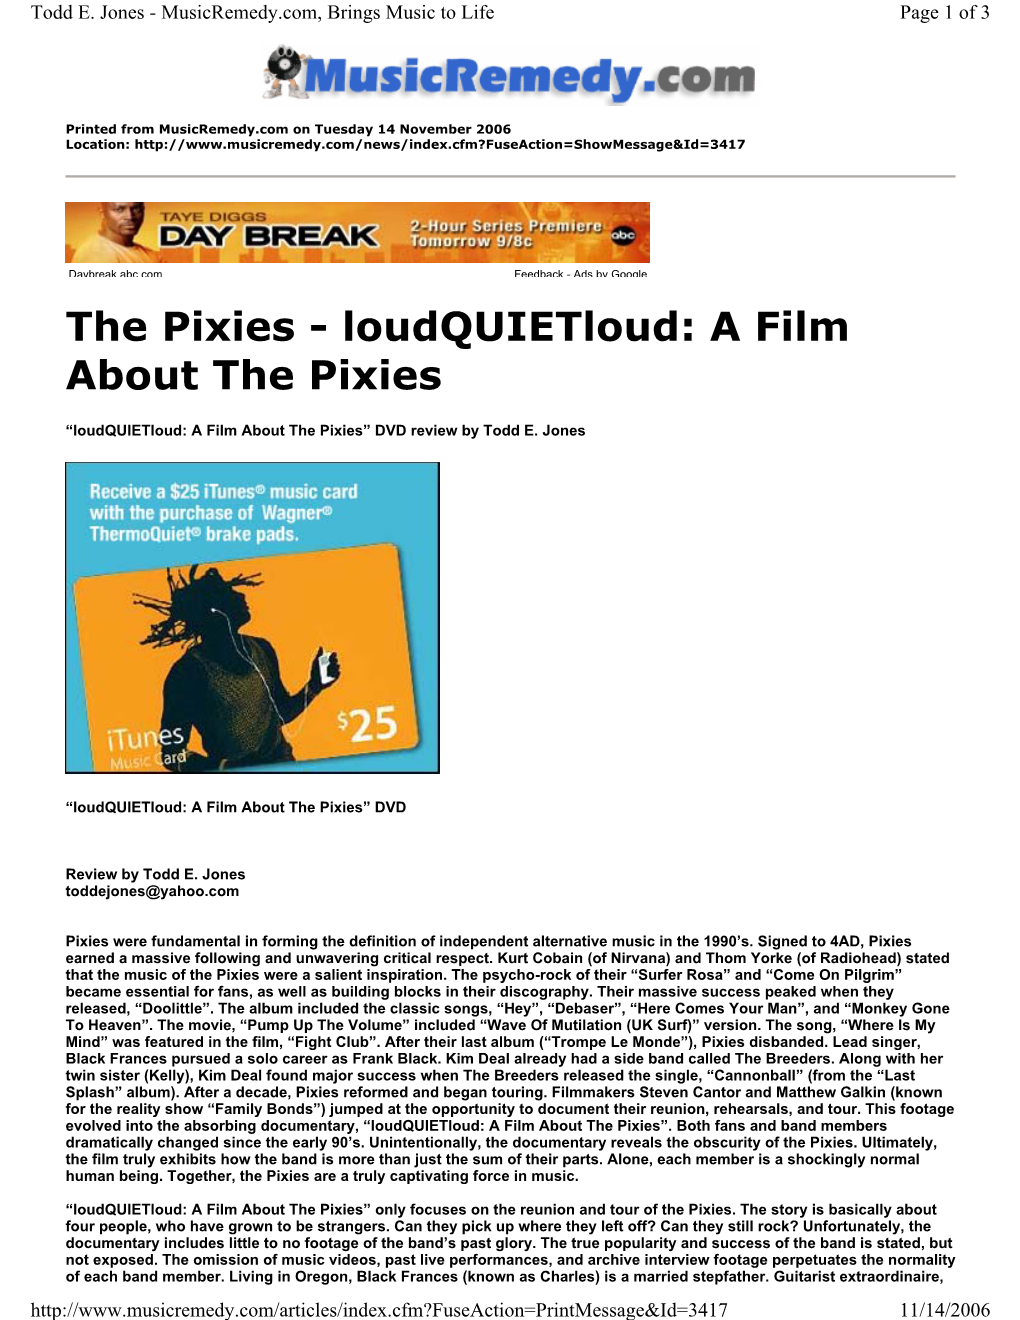 The Pixies - Loudquietloud: a Film About the Pixies